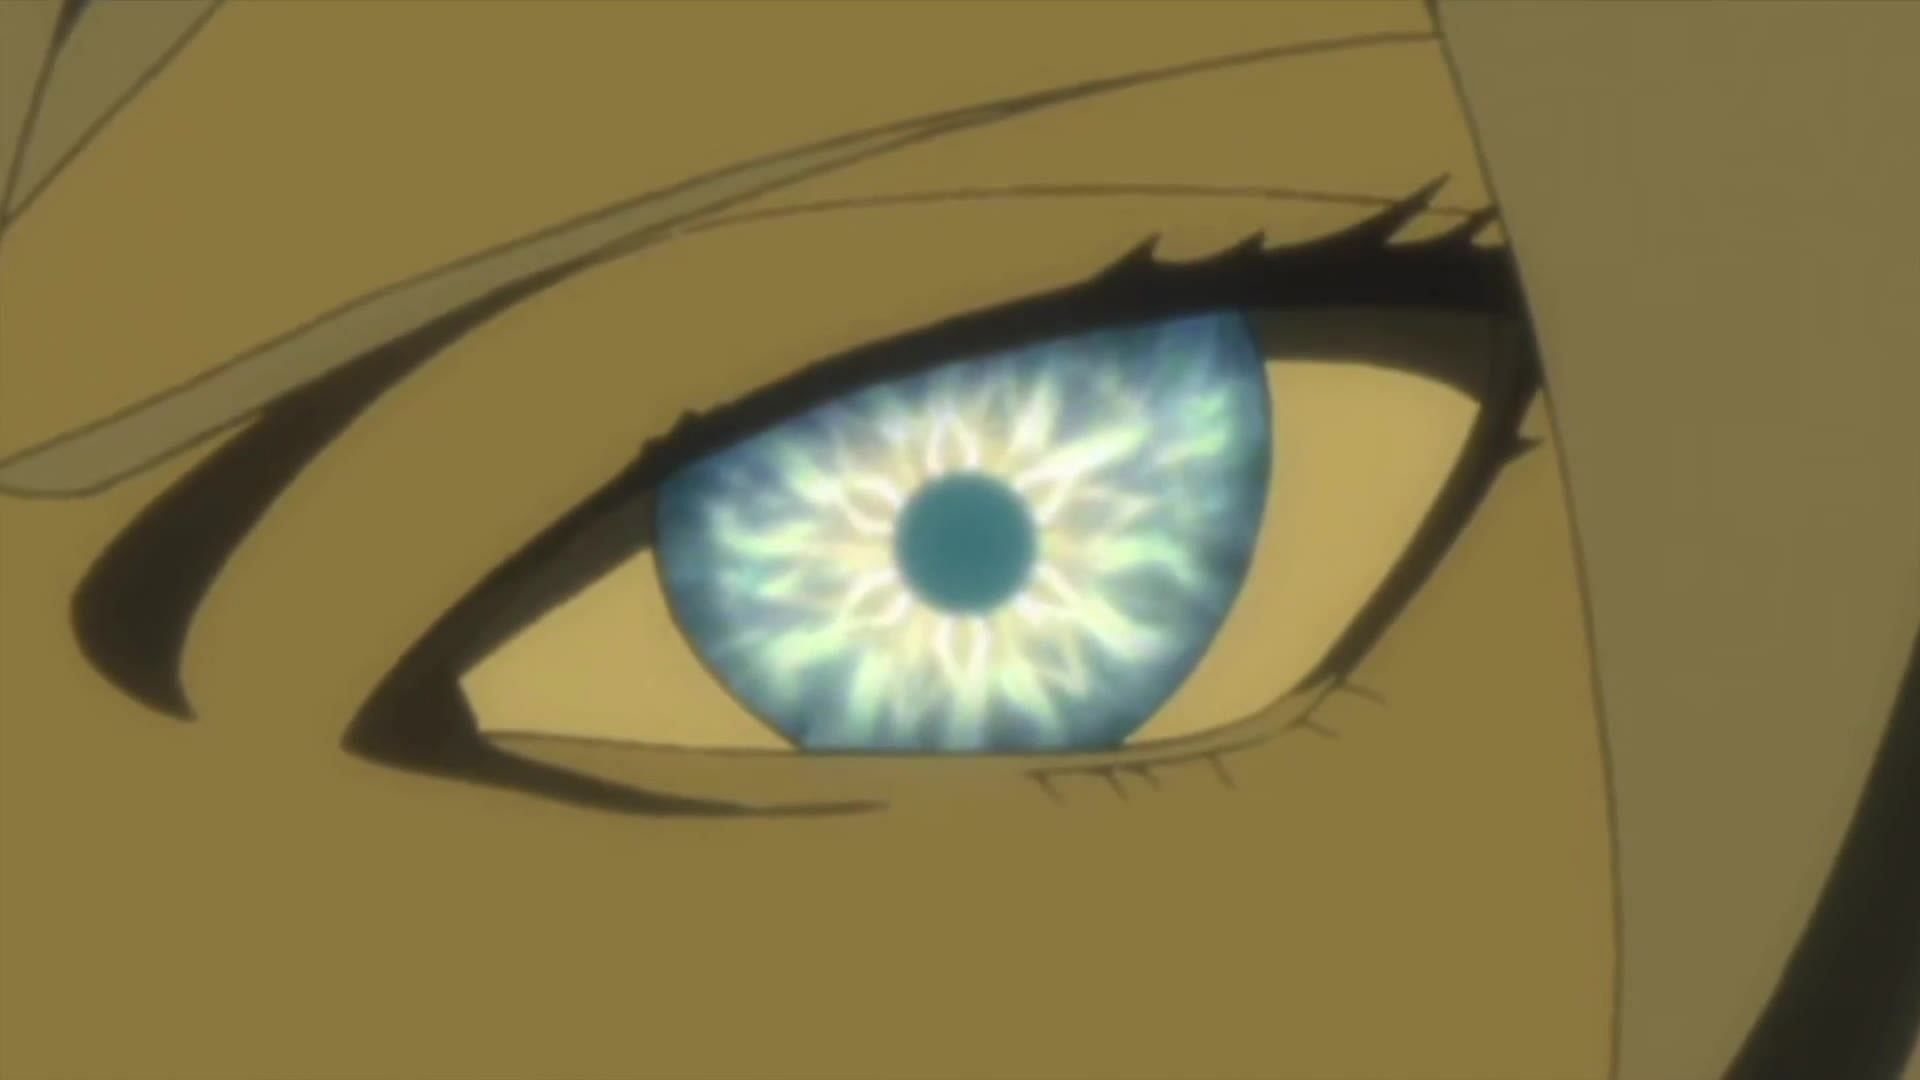 All Eyes Dojutsu In Naruto And Boruto